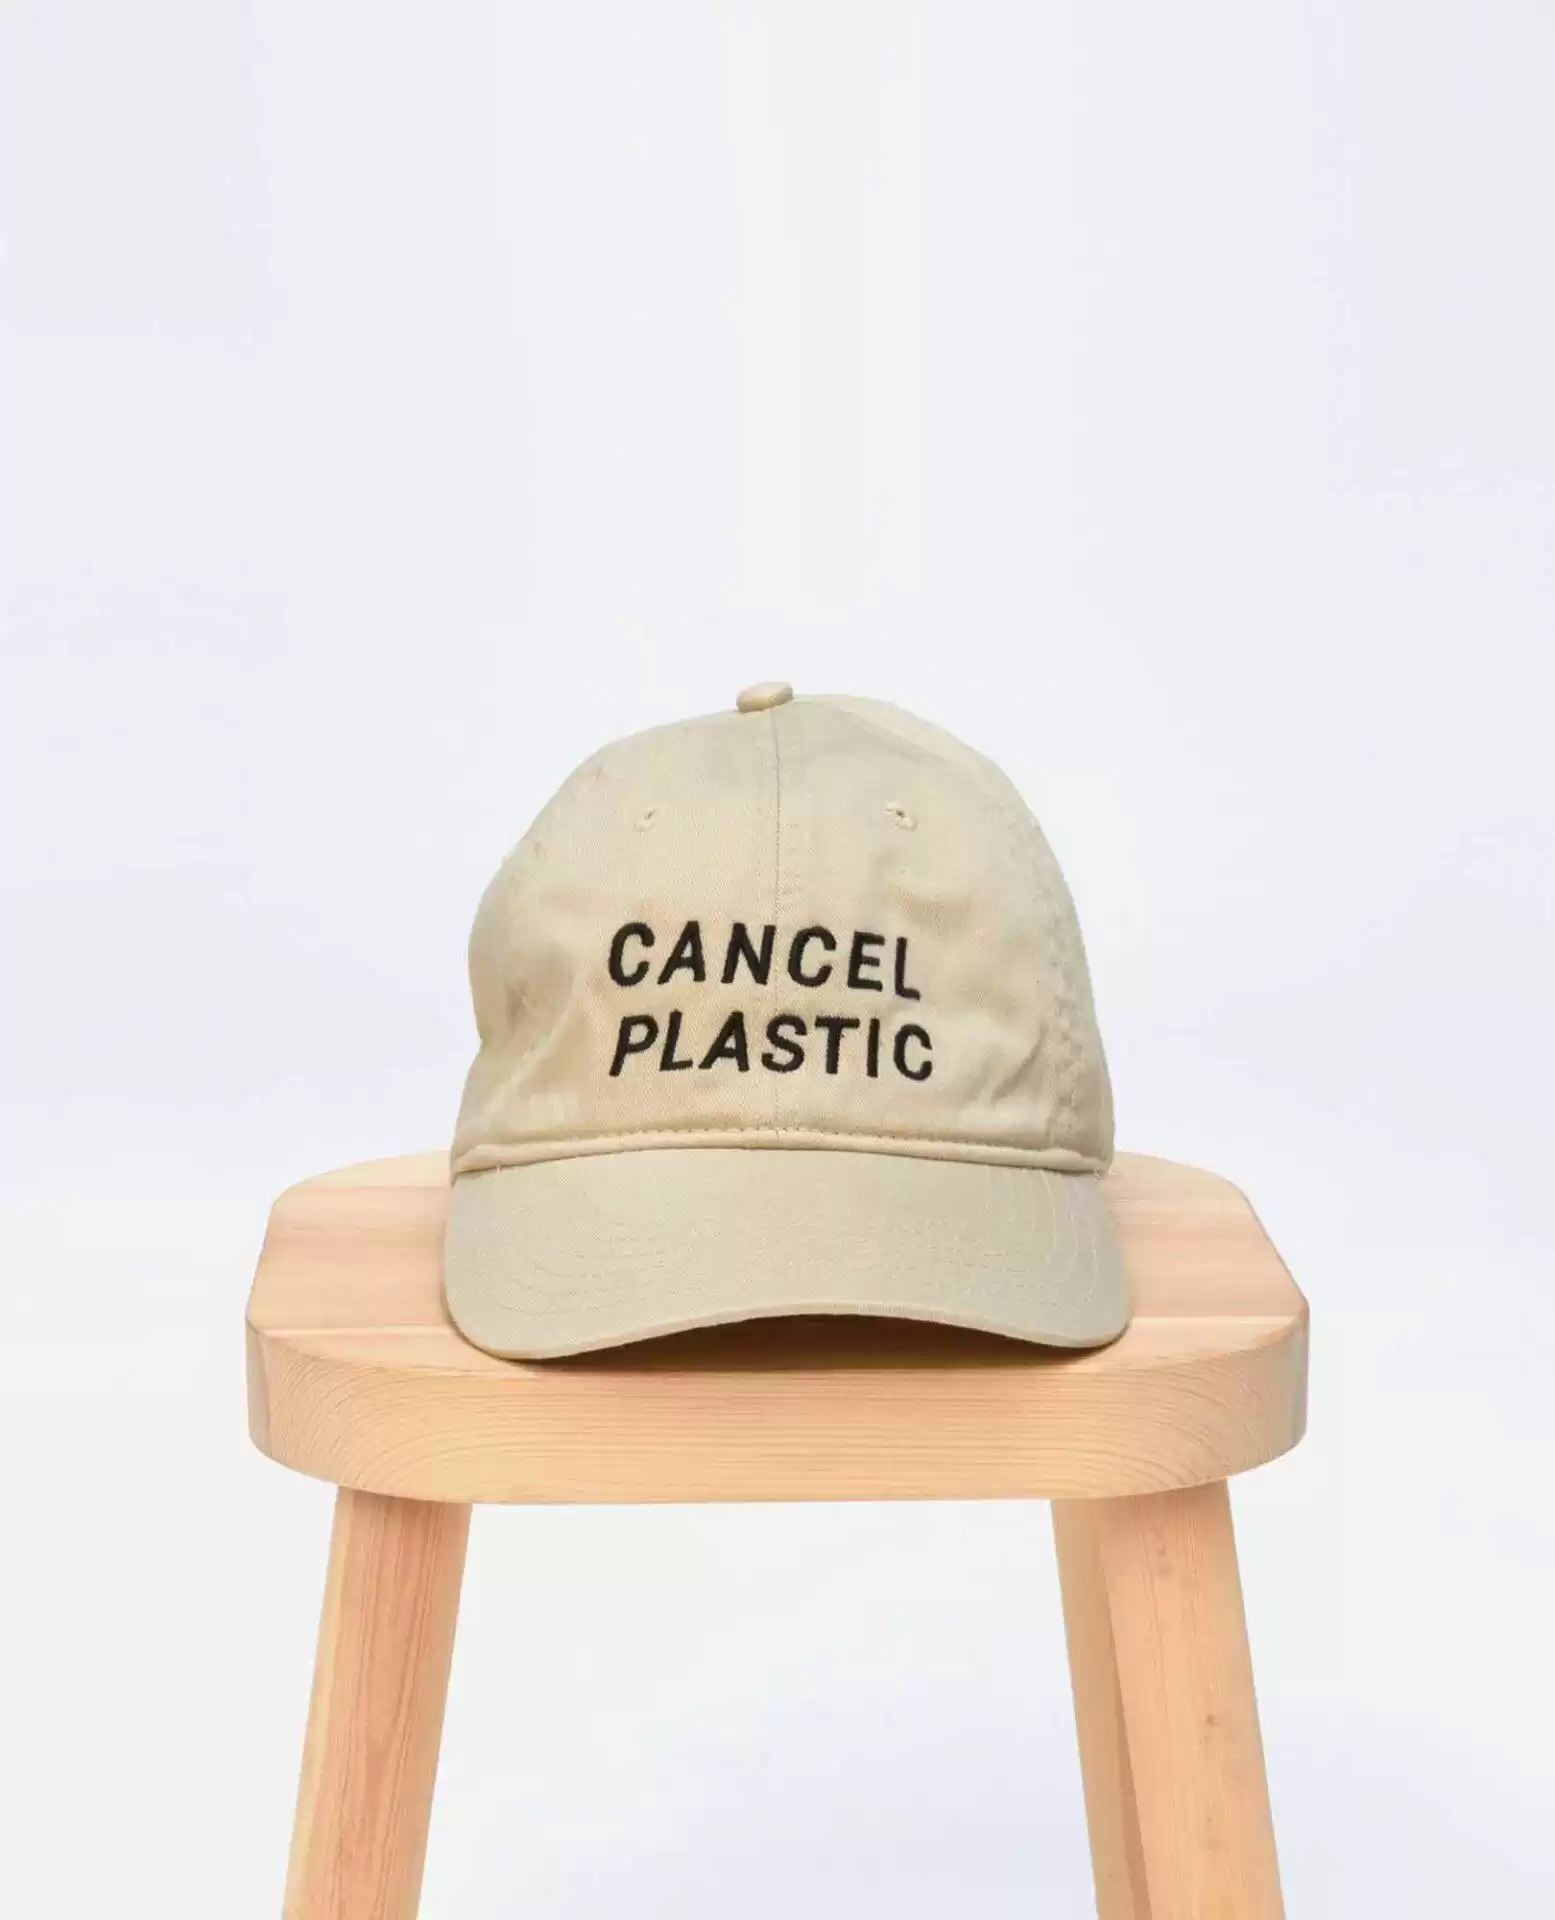 “Cancel plastic” hat